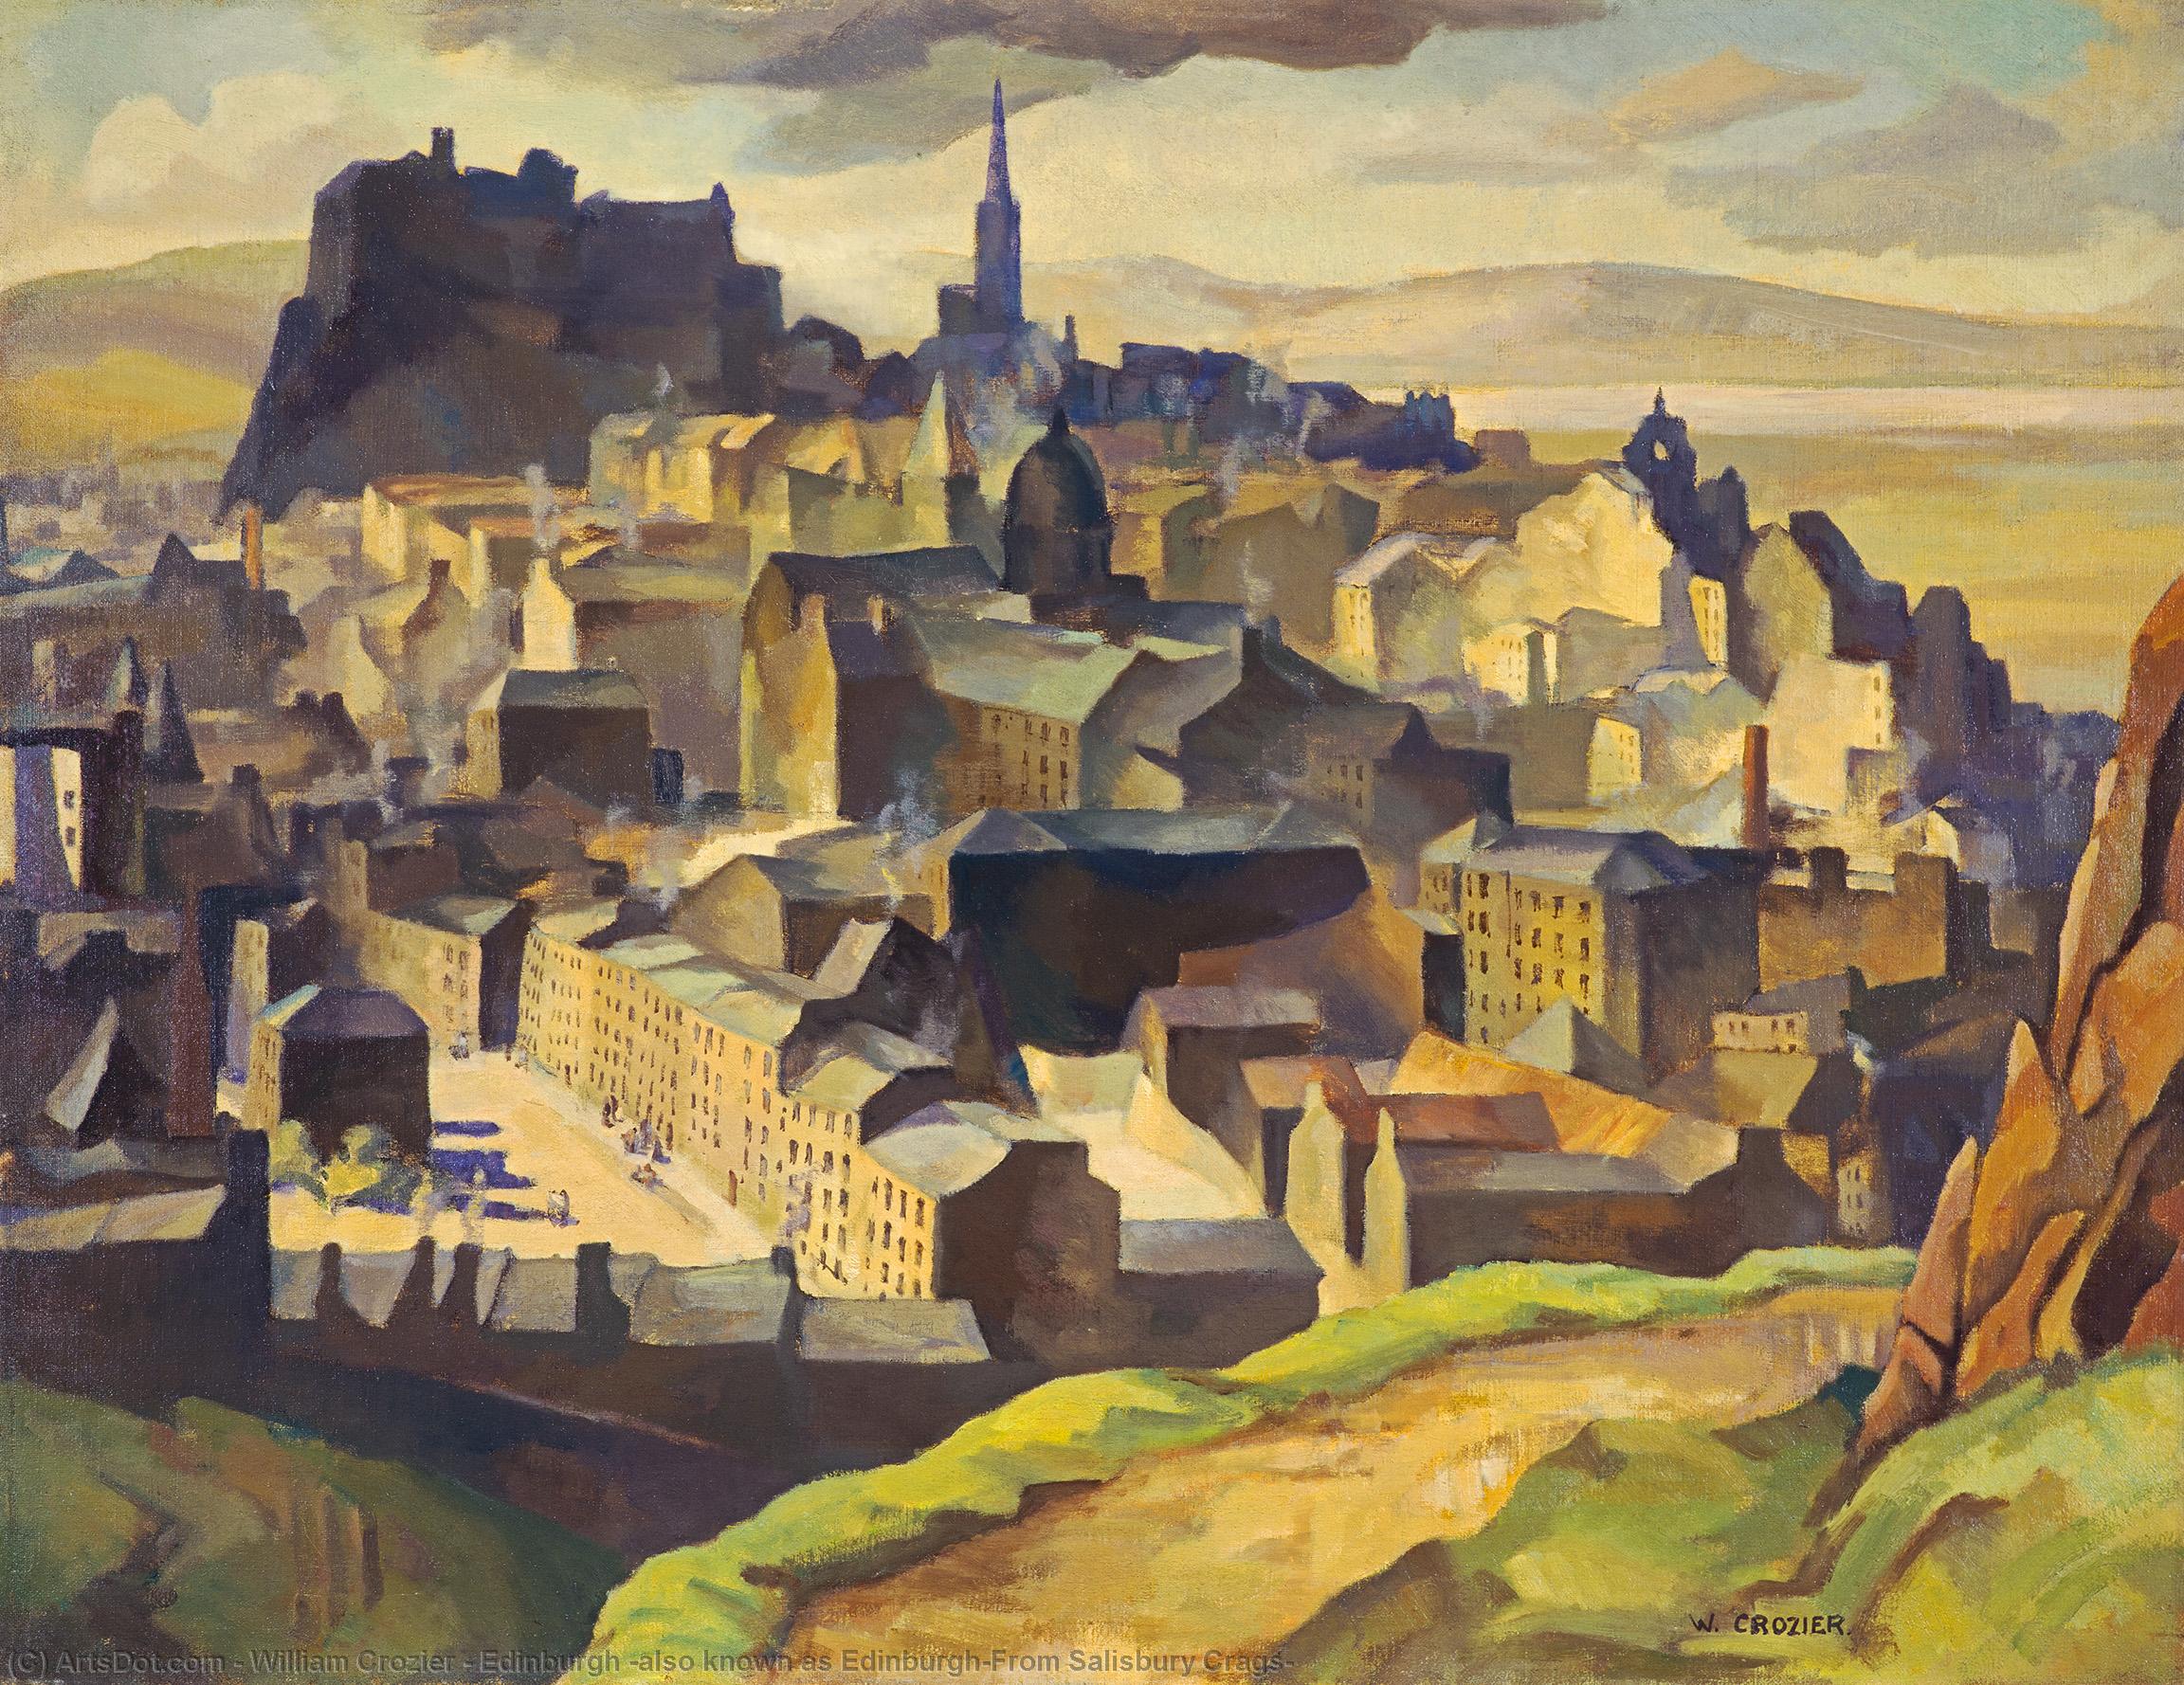 Edinburgh (also known as Edinburgh(From Salisbury Crags), 1927 by William Crozier (1930-2011) William Crozier | ArtsDot.com